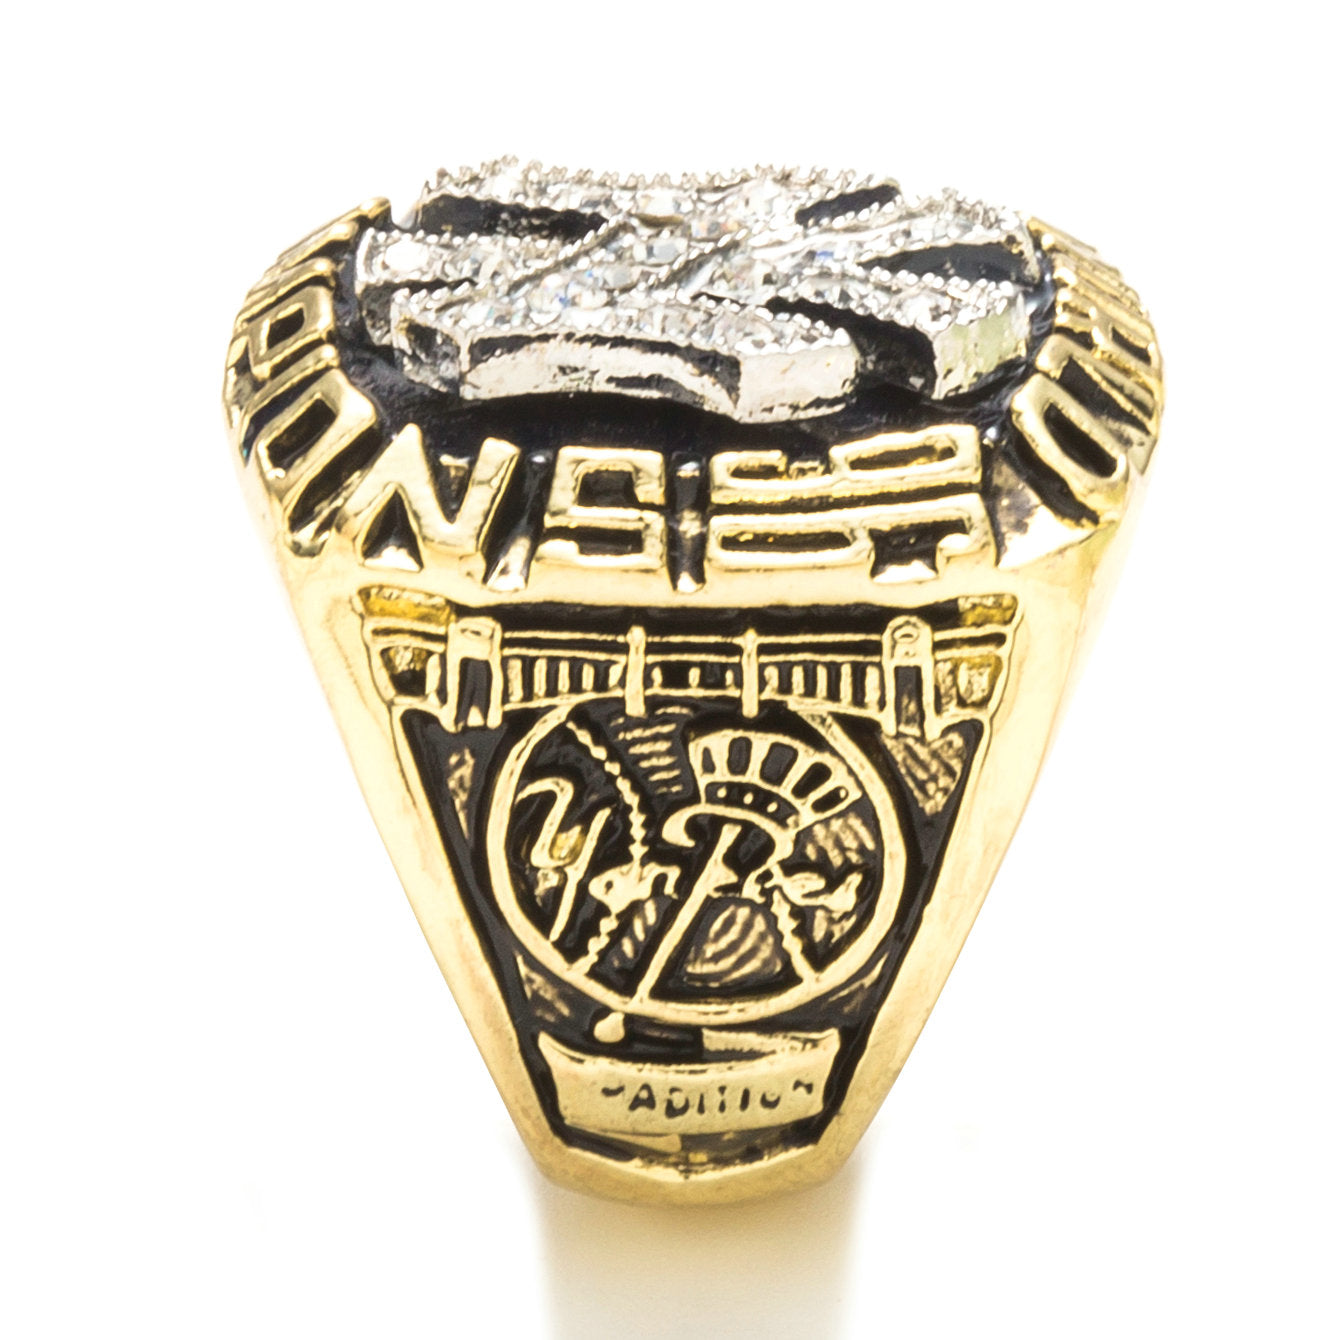 6 New York Yankees MLB World Series Championship Ring Set Replica - Yes - 12